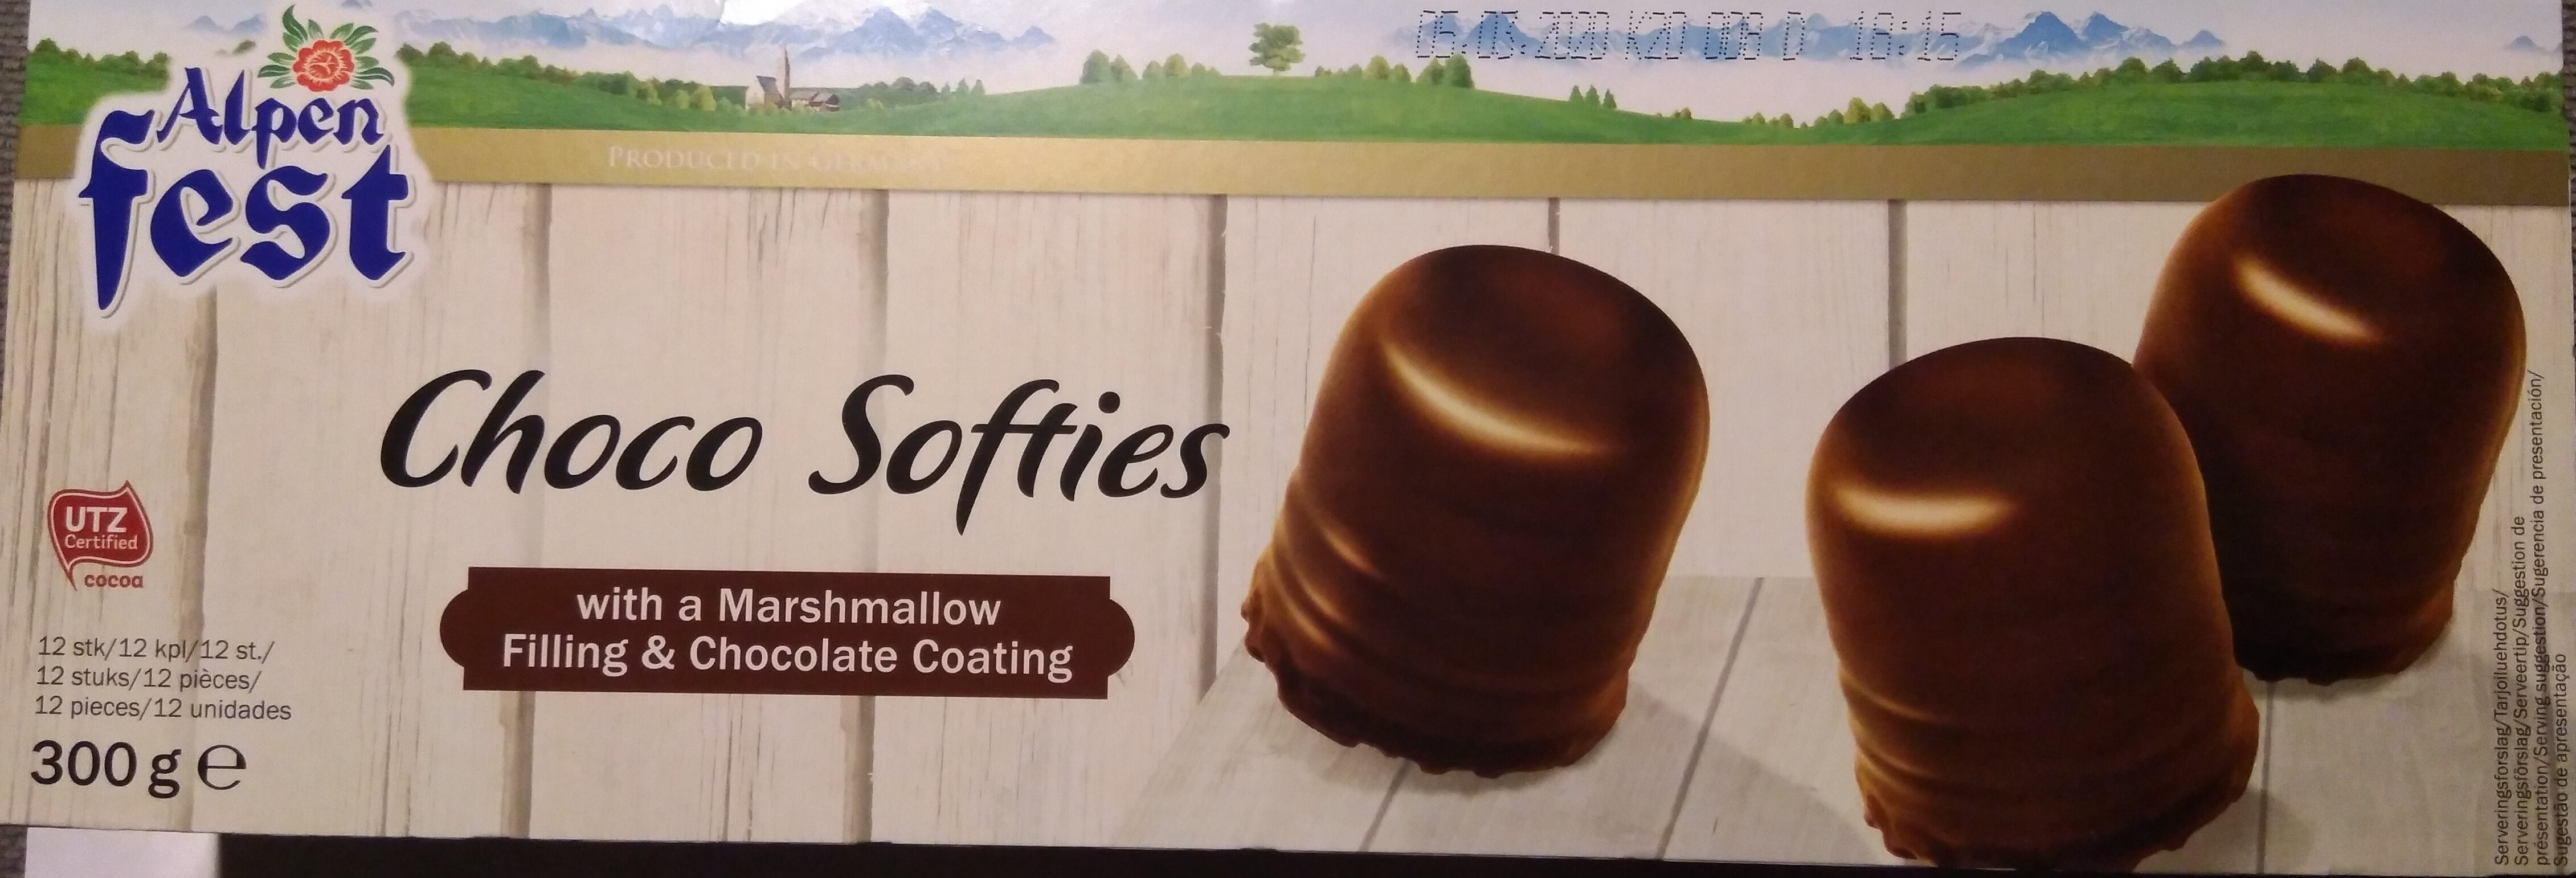 Choco Softies - Tuote